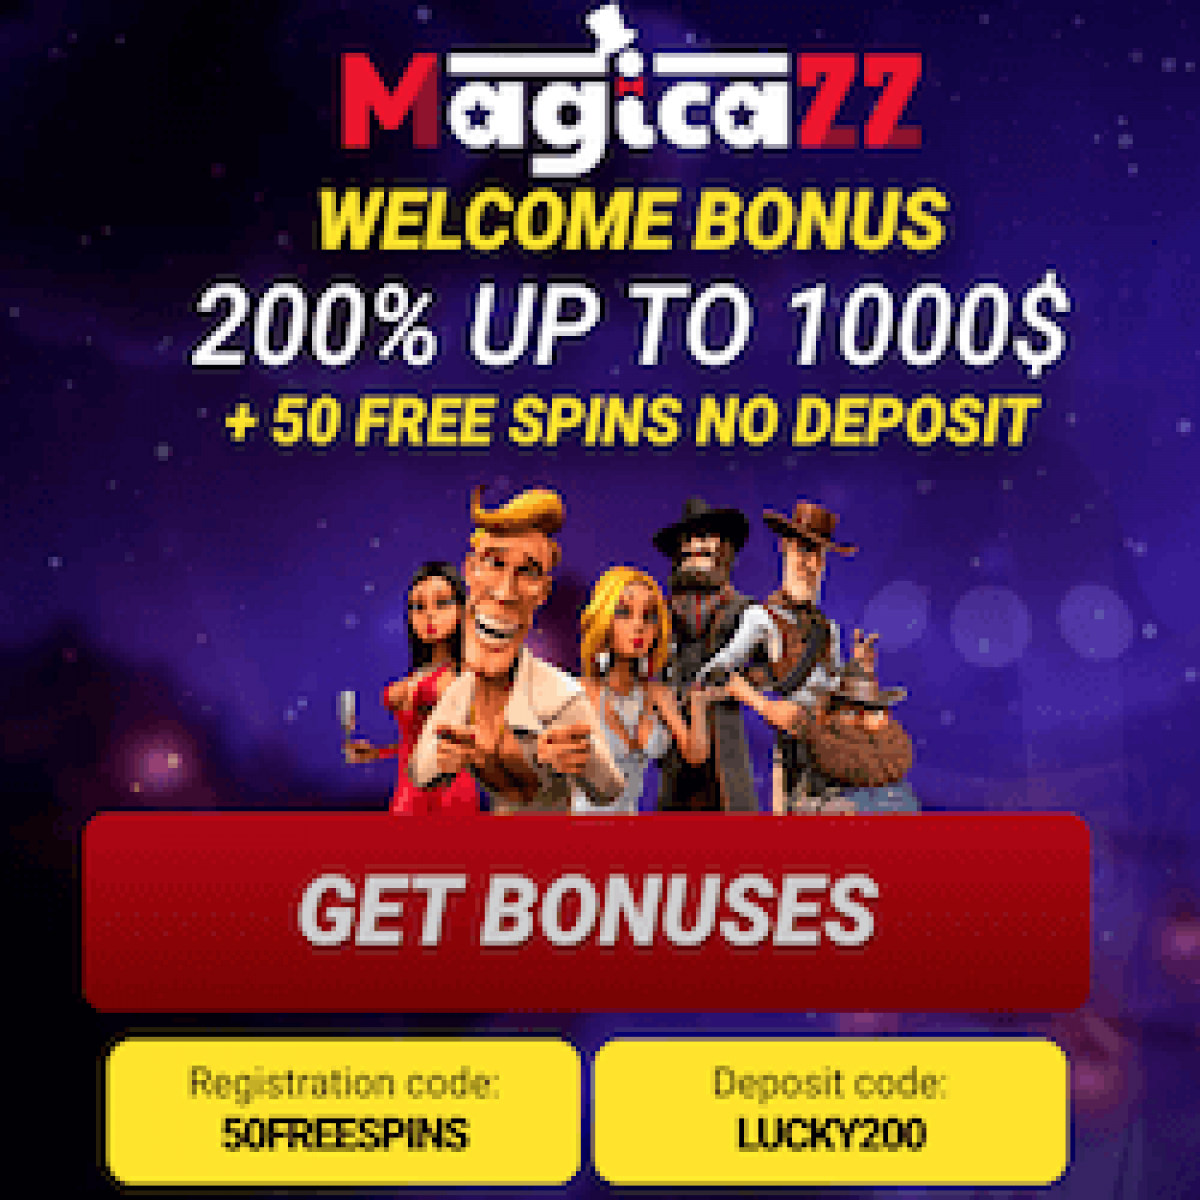 Hey spin casino no deposit bonus